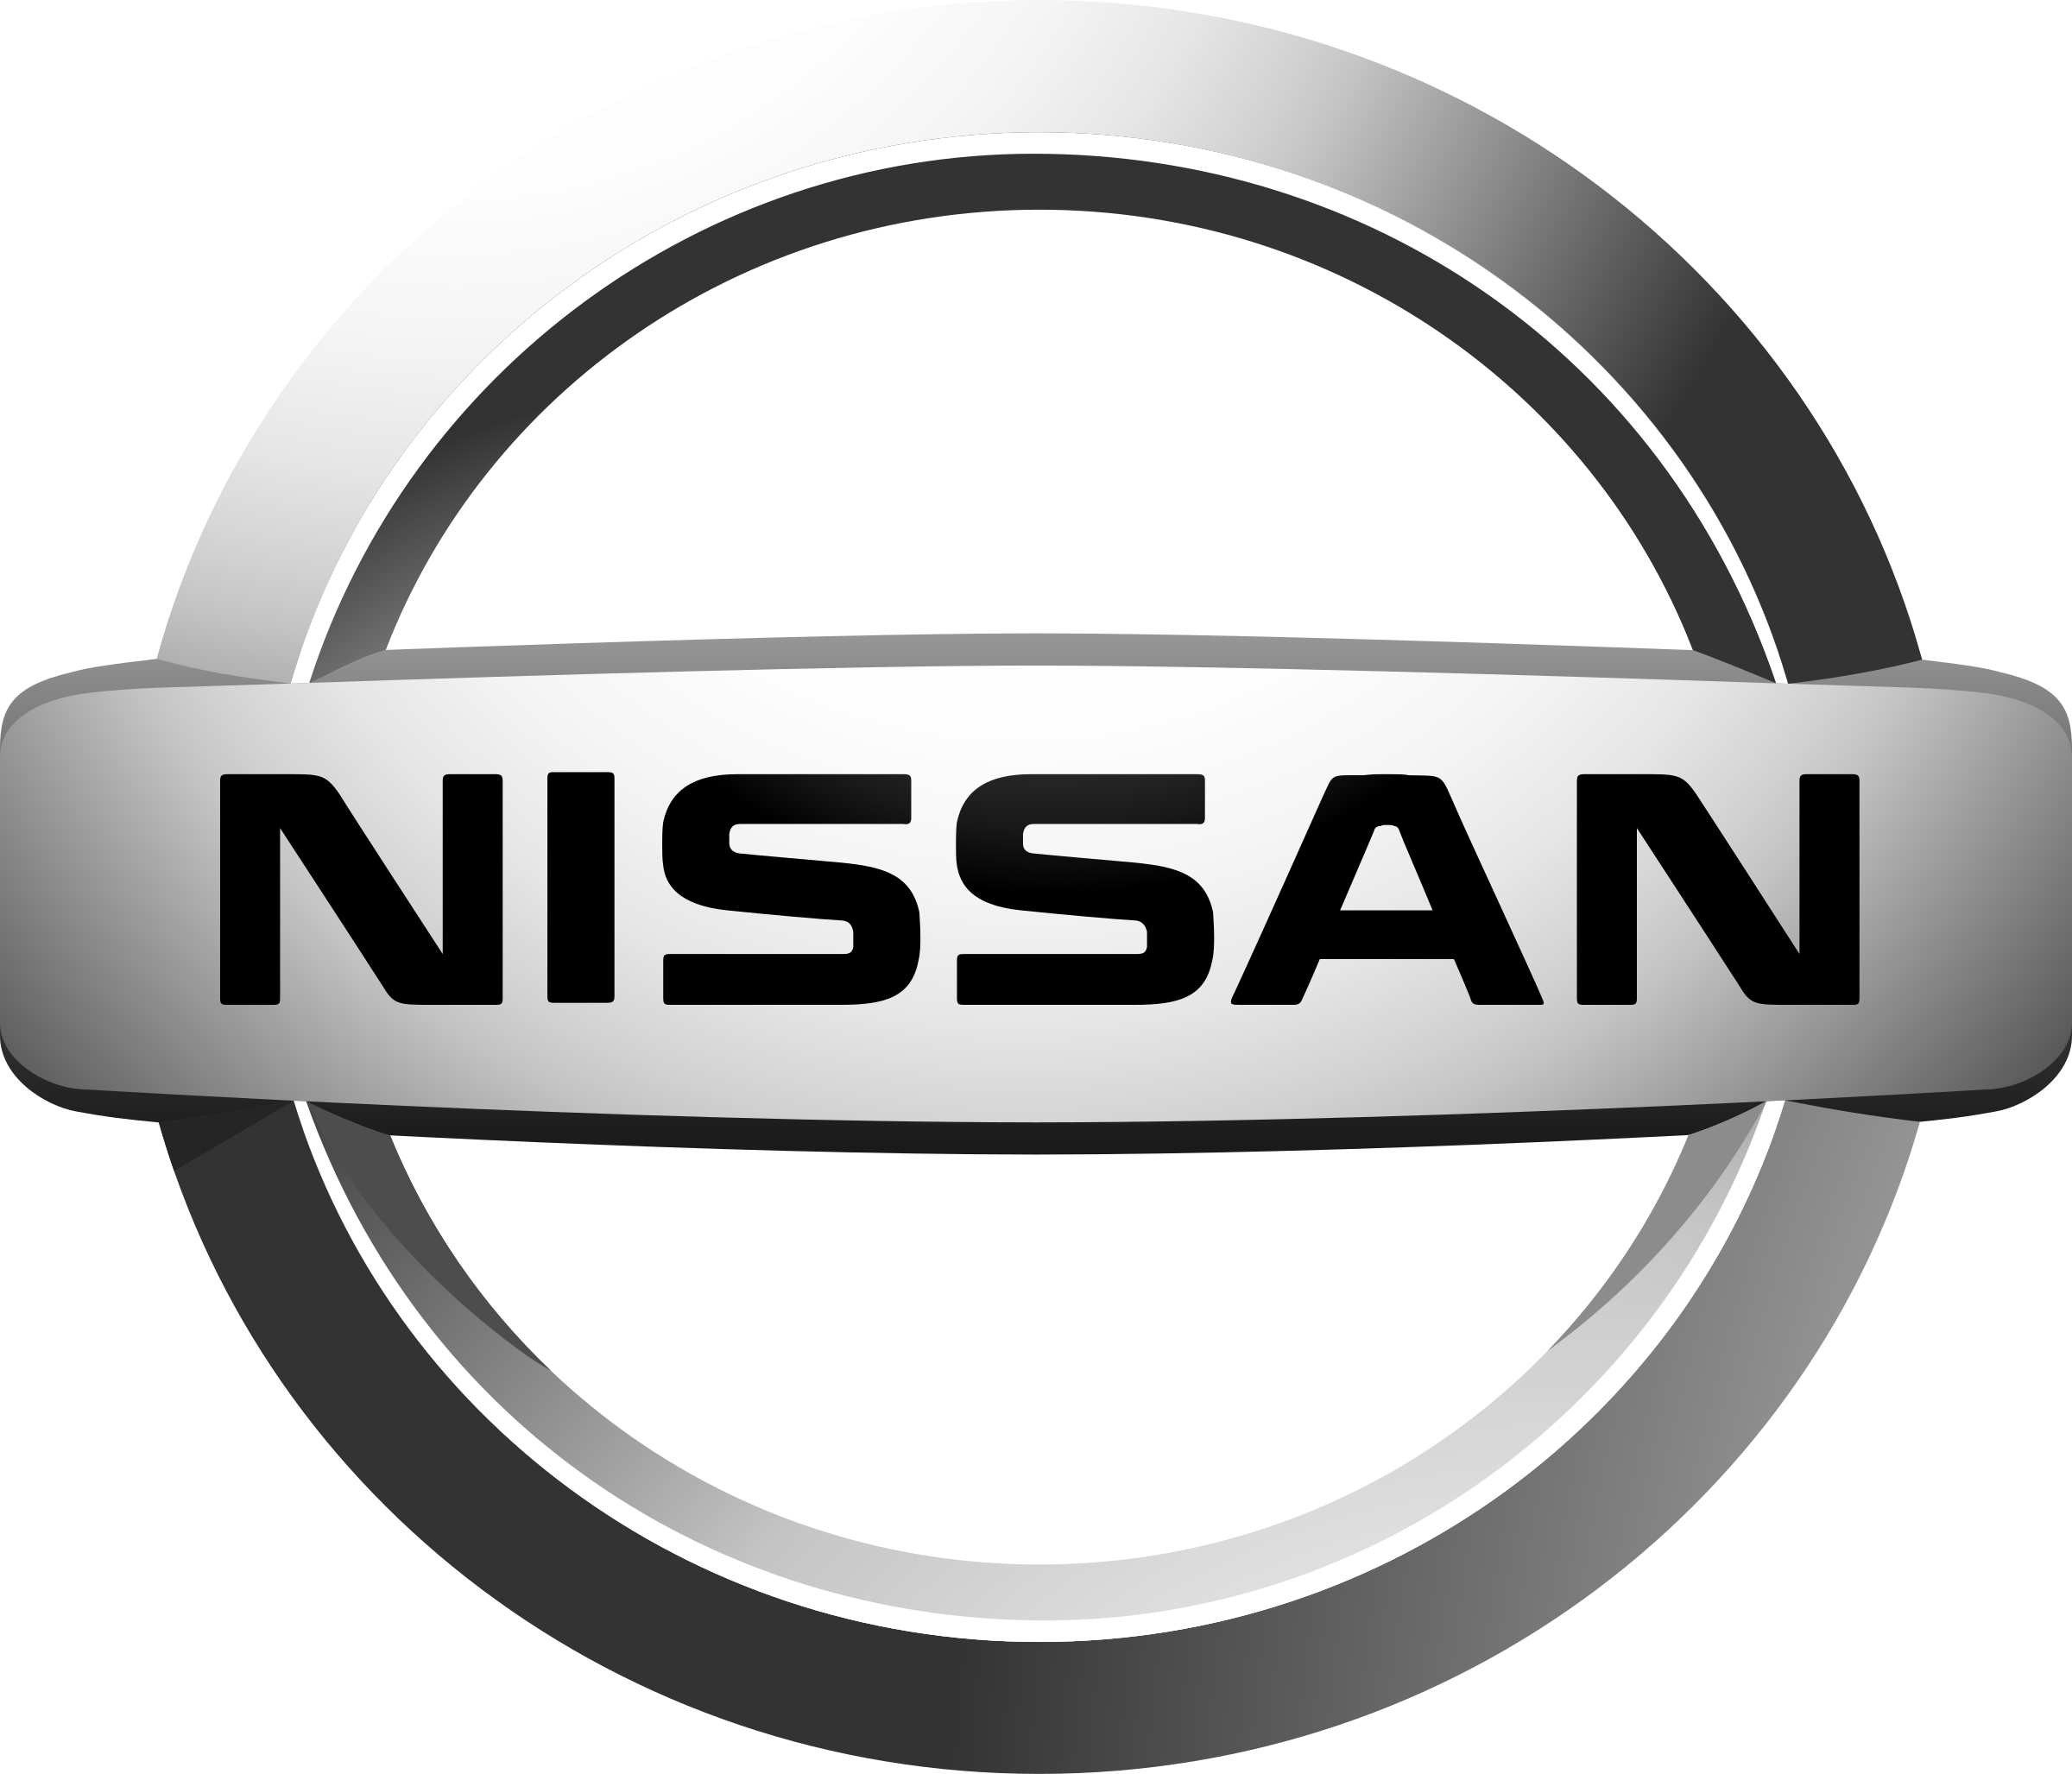 nissan-6-logo-png-transparent